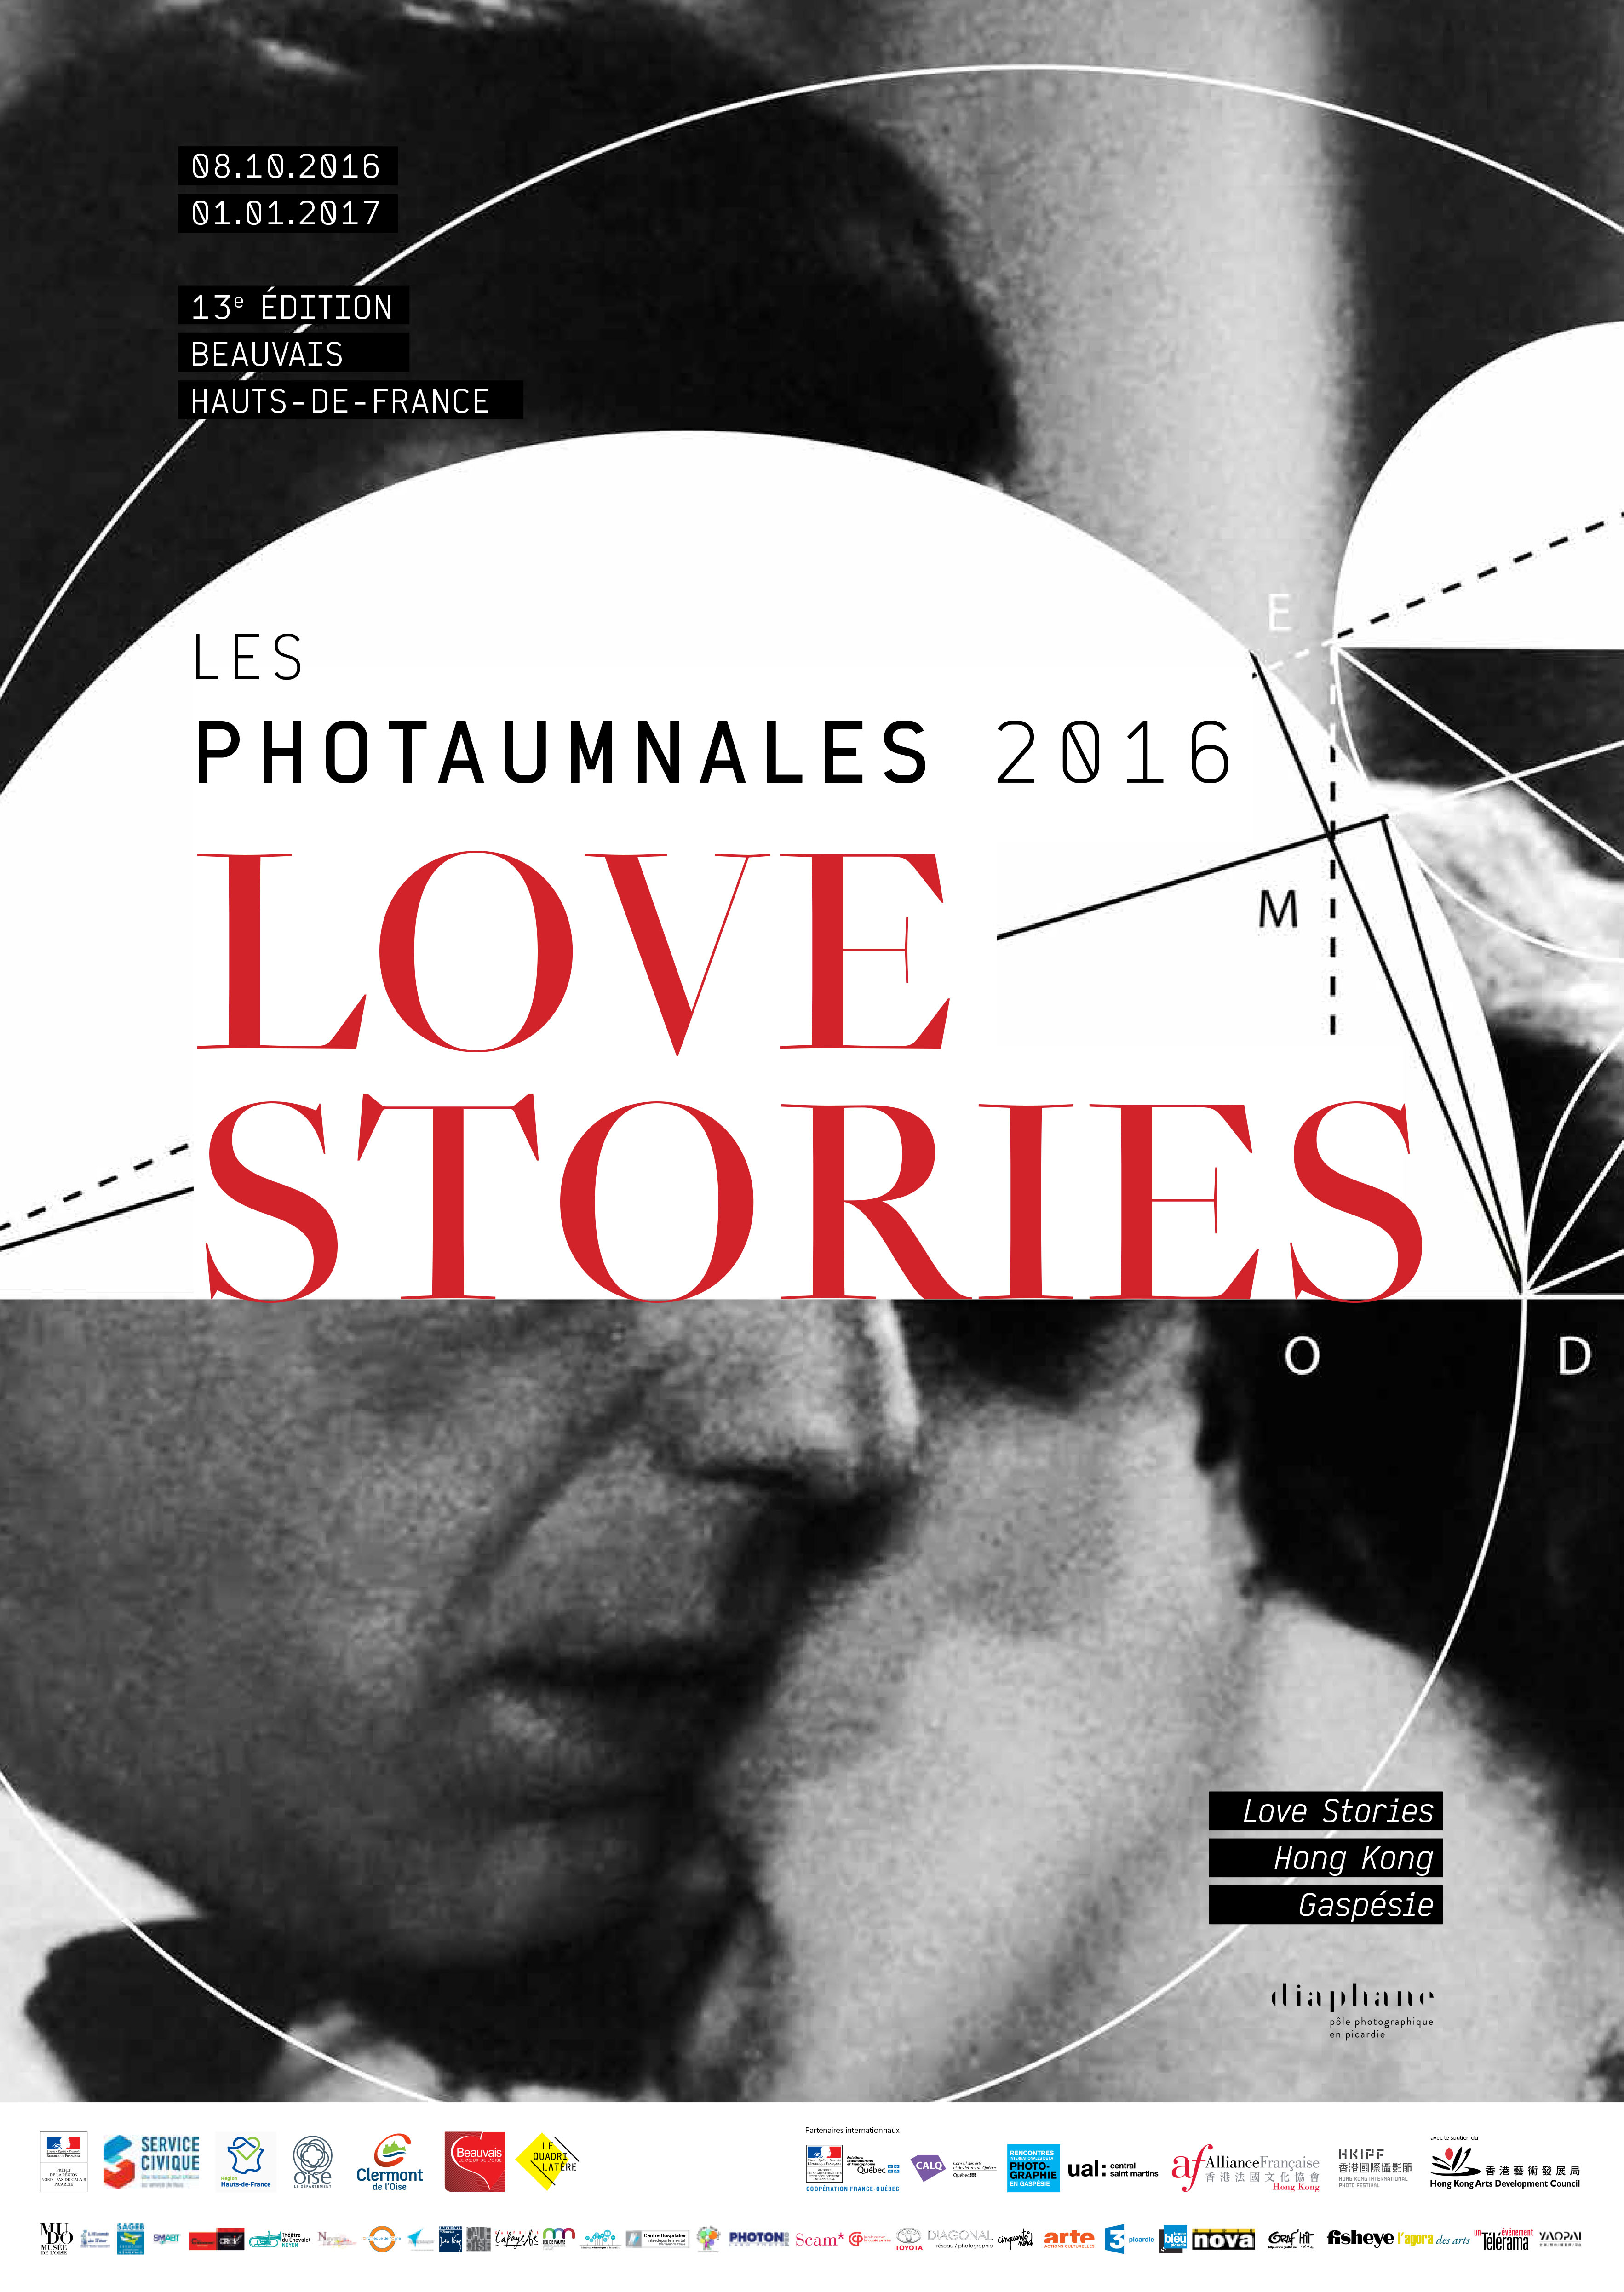 Photaumnales 2016